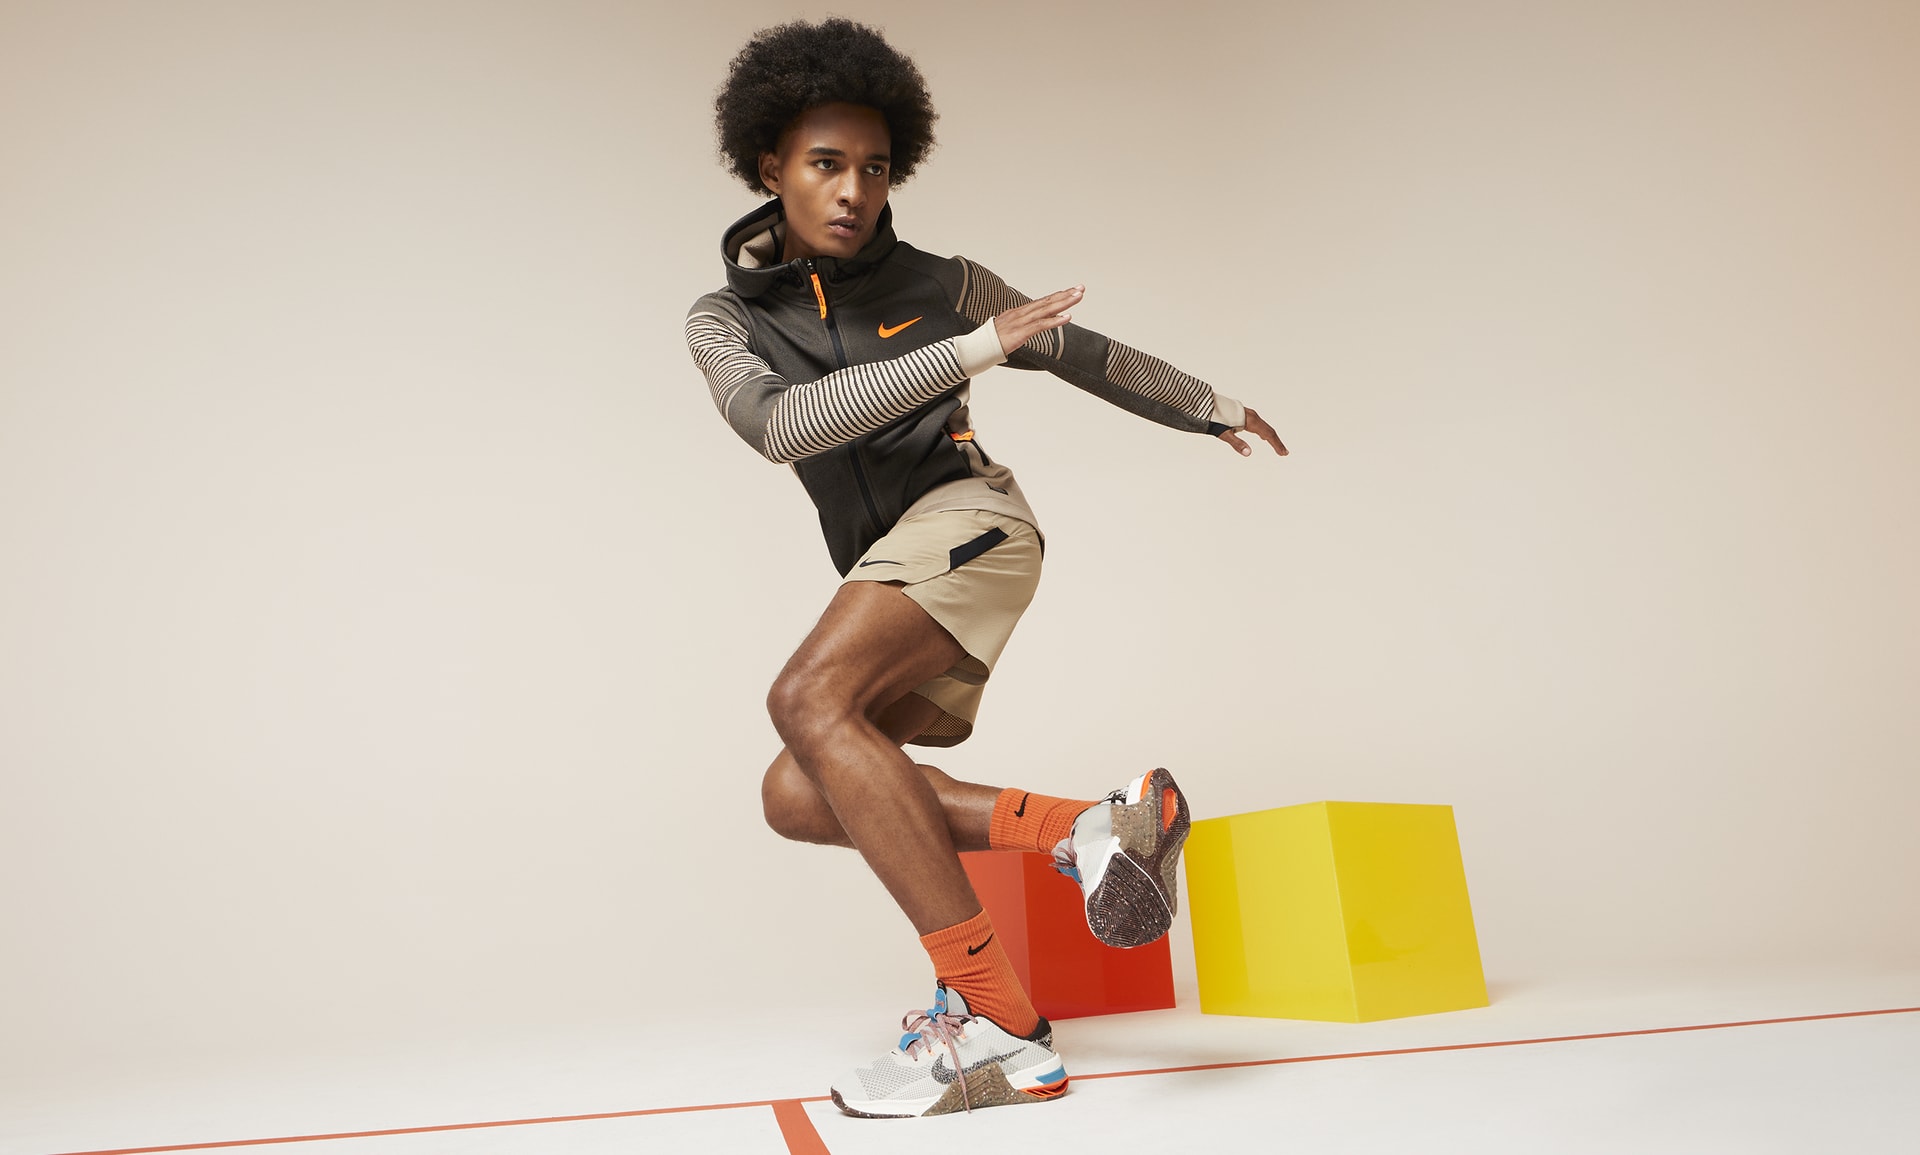 Pantalon de fitness Dri-FIT Nike Flex Rep pour homme. Nike LU